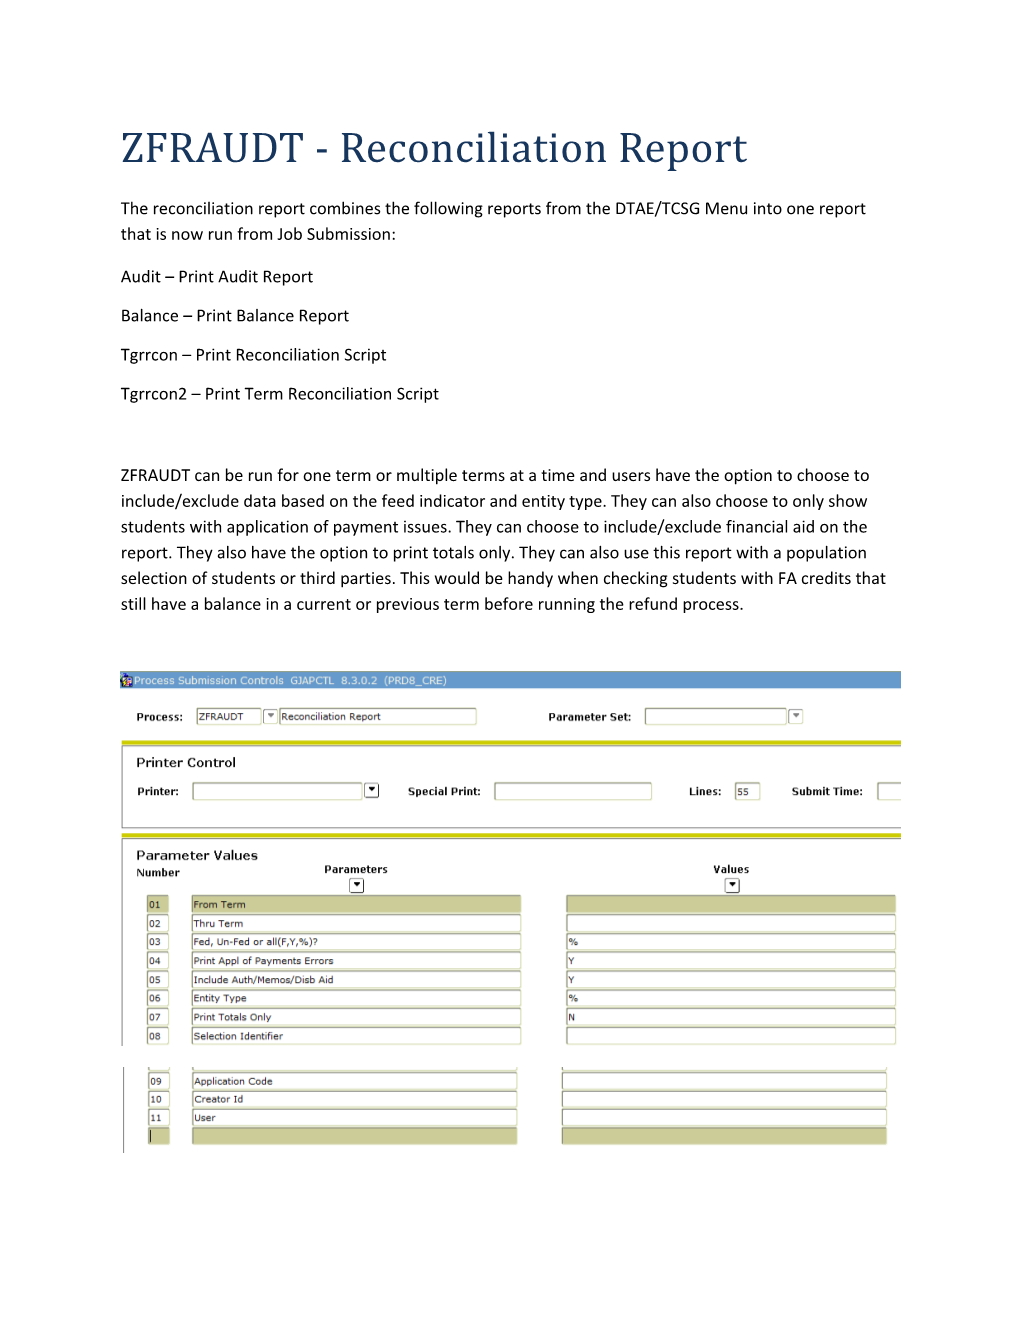 ZFRAUDT - Reconciliation Report